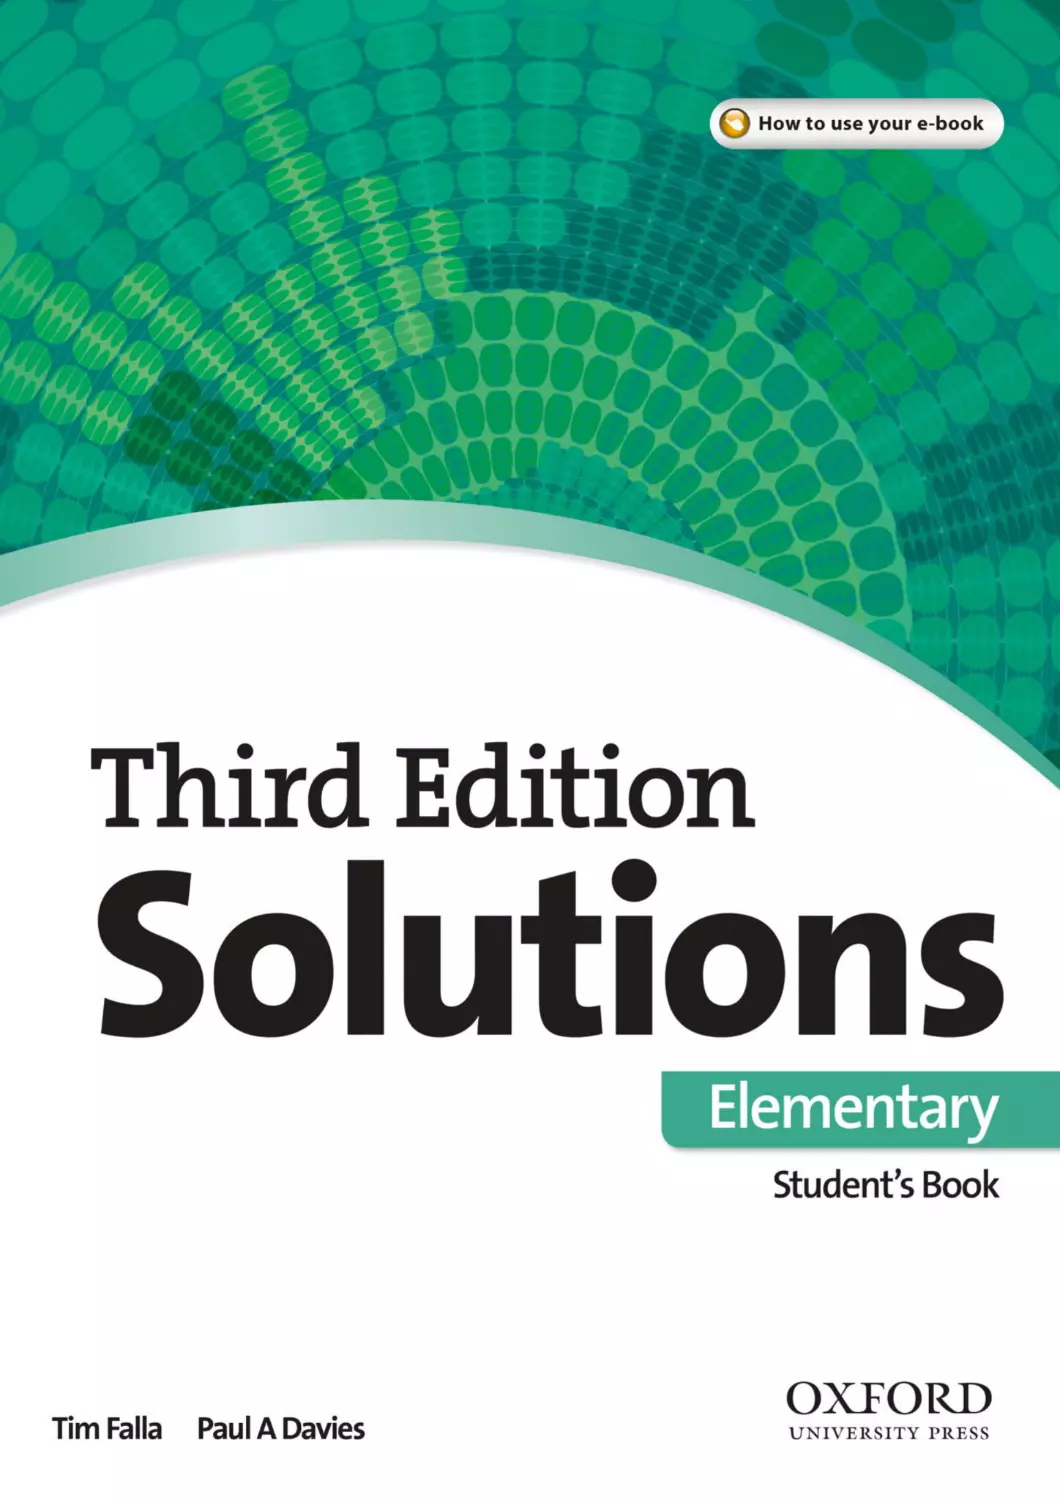 Solution elementary students учебник. Solutions Elementary 3rd Edition. Солюшнс элементари 3 издание. Solutions Elementary 3rd Edition Workbook. Учебник third Edition solutions Elementary.